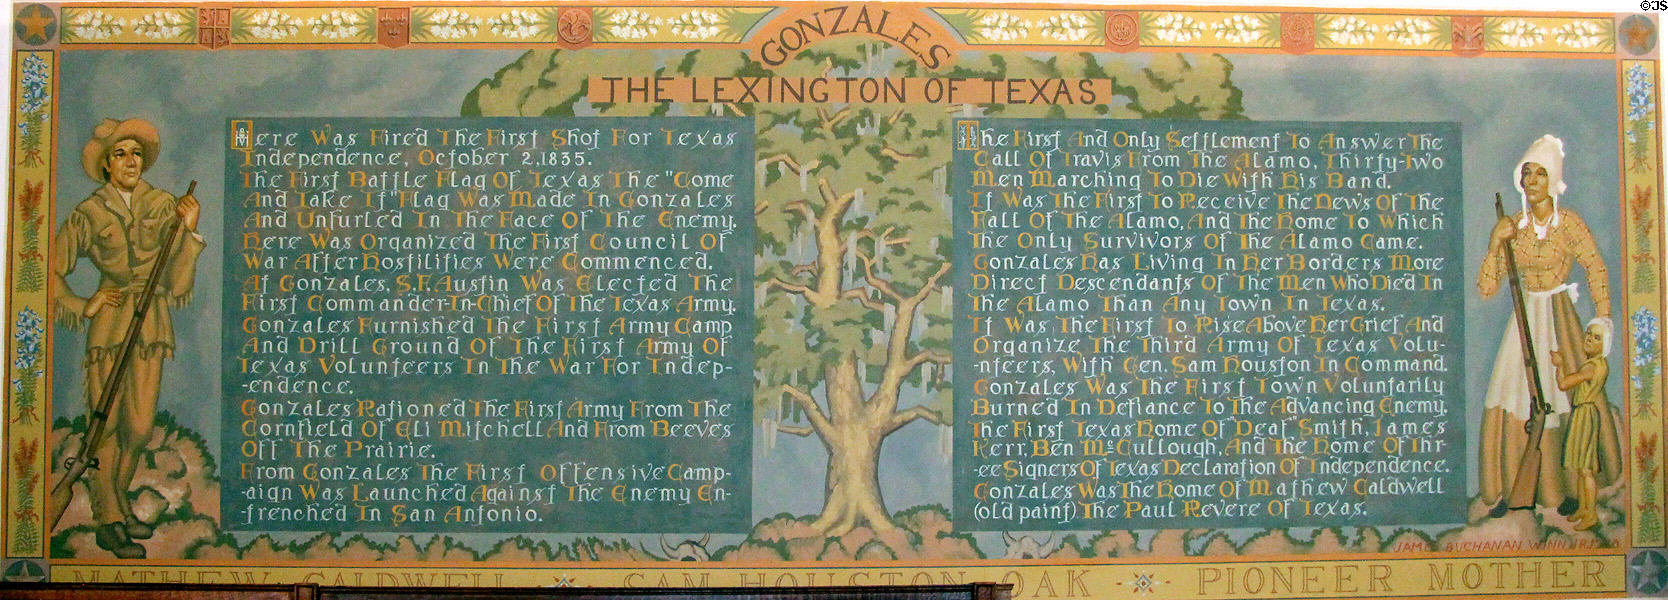 Gonzales the Lexington of Texas mural (1938) by James Buchanan Winn Jr. at Gonzales Historical Memorial. Gonzales, TX.